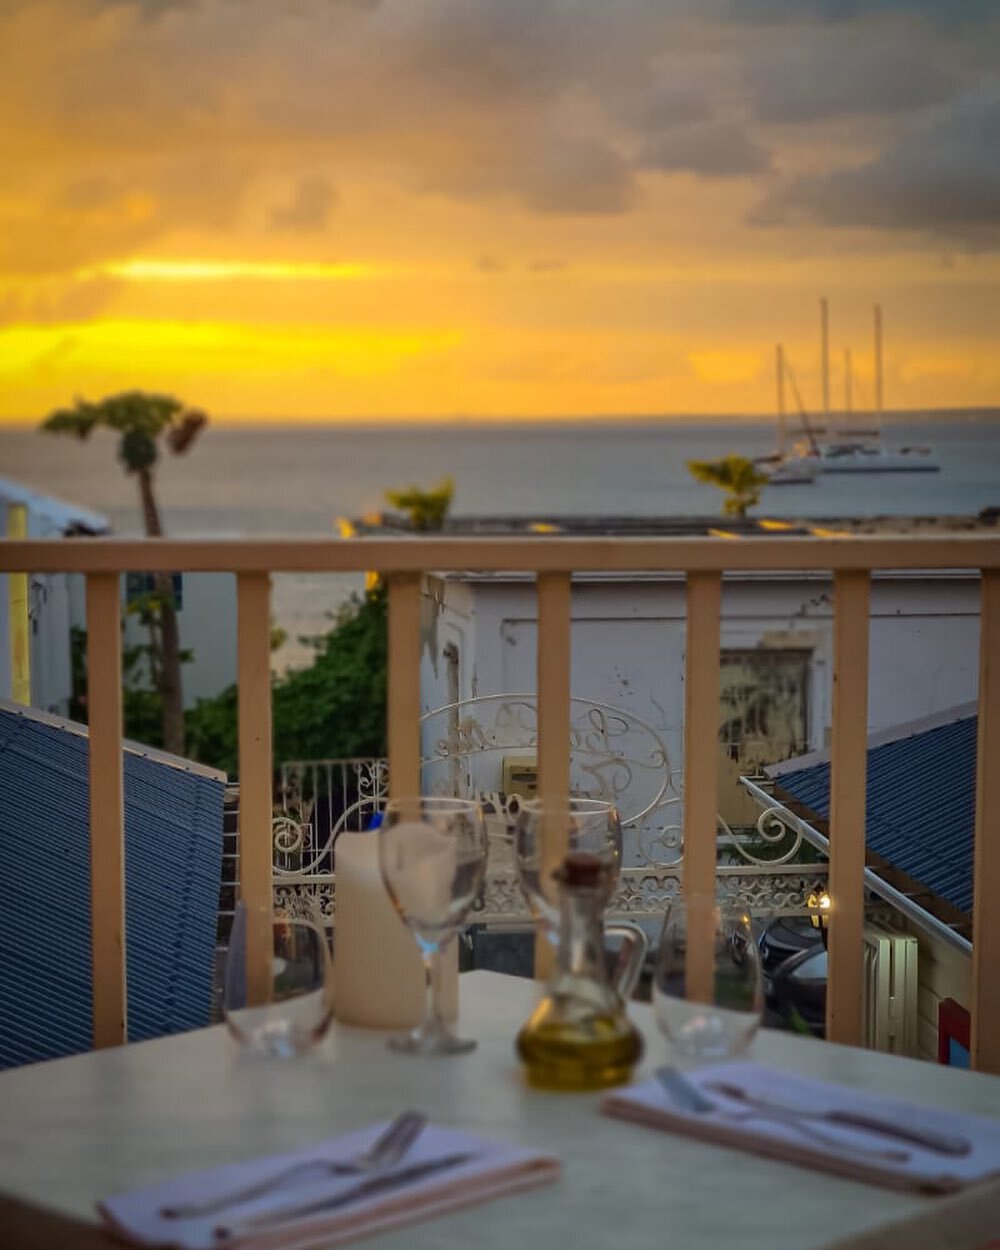 Dinner with a view 🌅
.
.
.
#seaview #rooftop #grandcase #sxm #saintmartin #stmartin #sintmaarten #sxmrestaurant #sxmfood #lesolivierssxm #restaurantgrandcase #frenchrestaurant